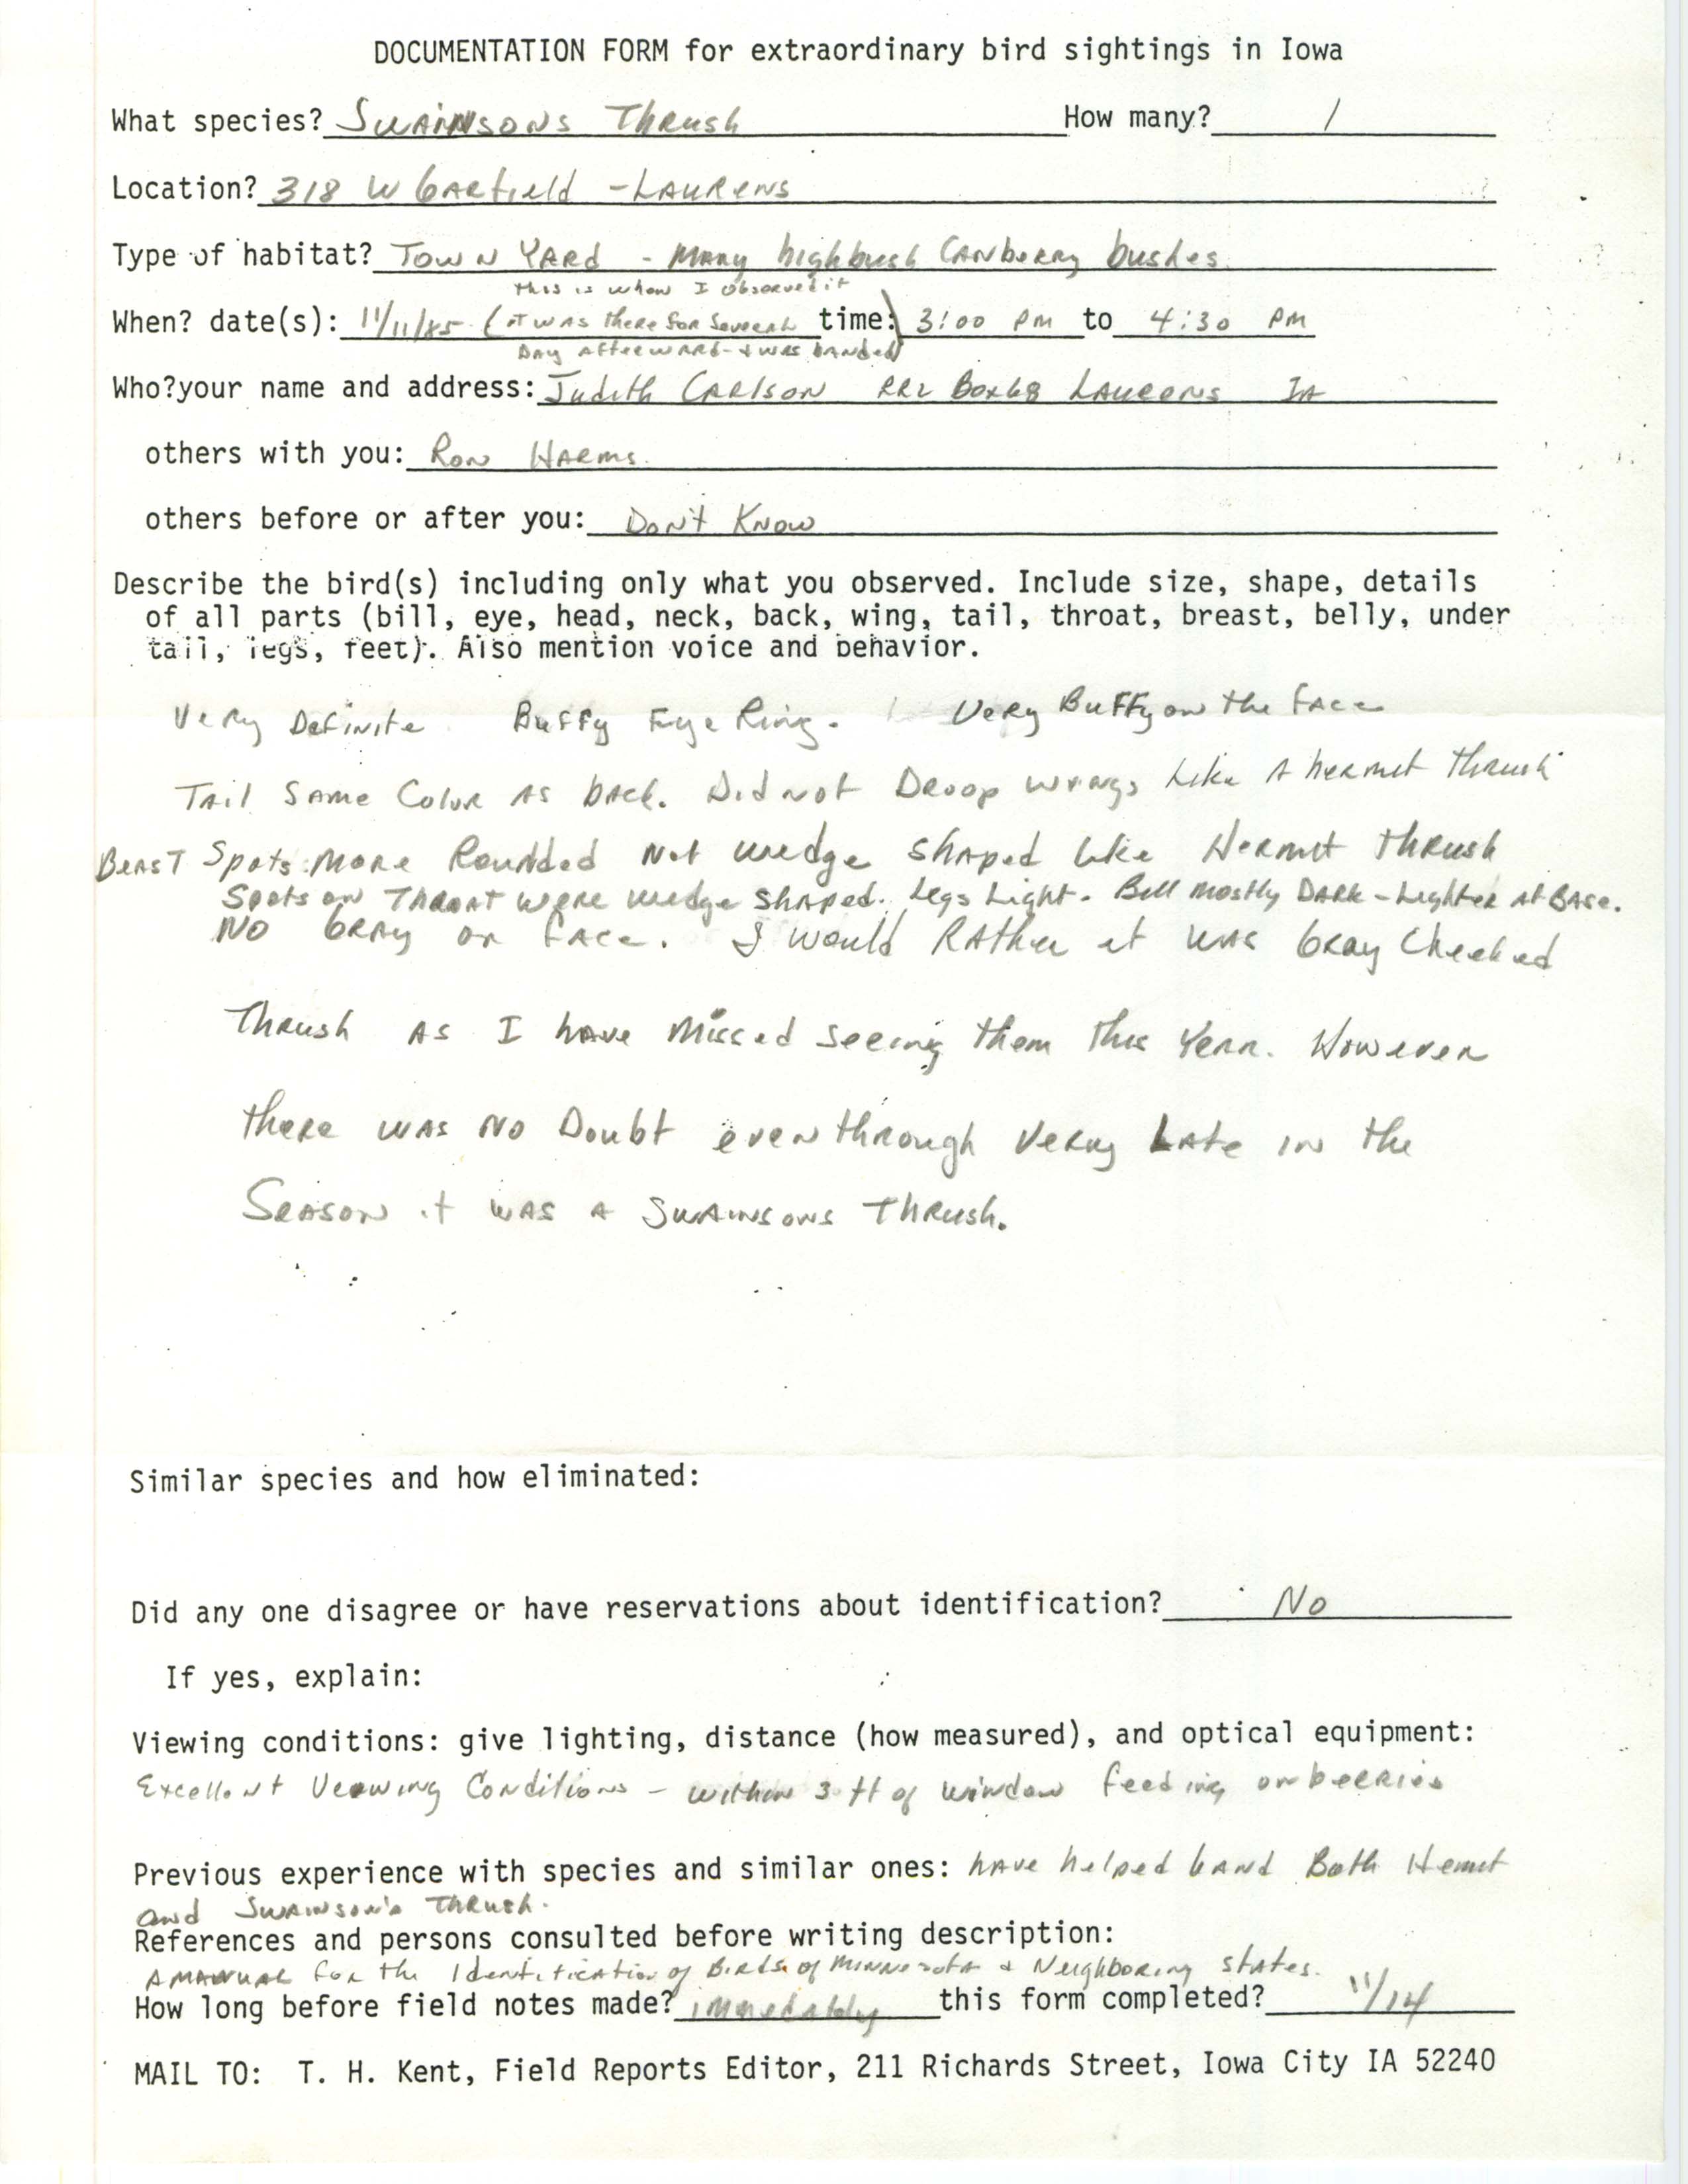 Rare bird documentation form for Swainson's Thrush at Laurens, 1985